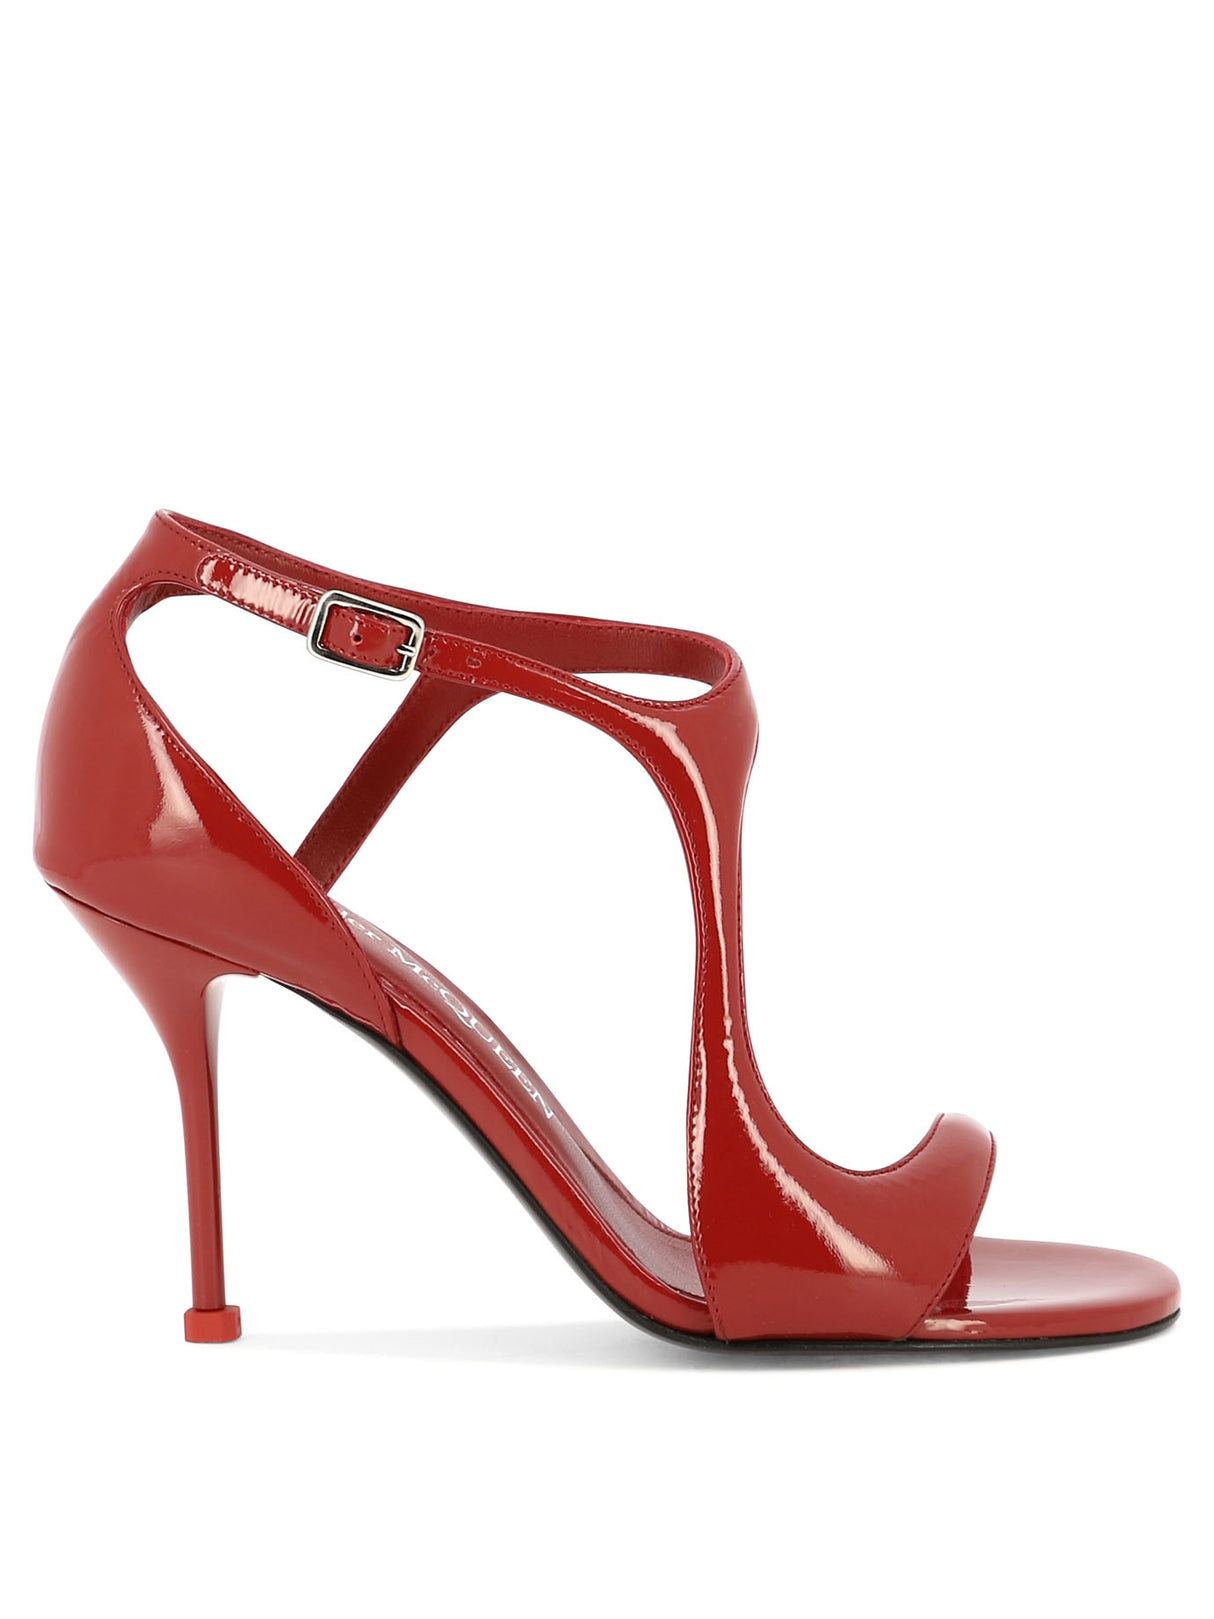 ALEXANDER MCQUEEN Extra Soft Red Sandals for Women